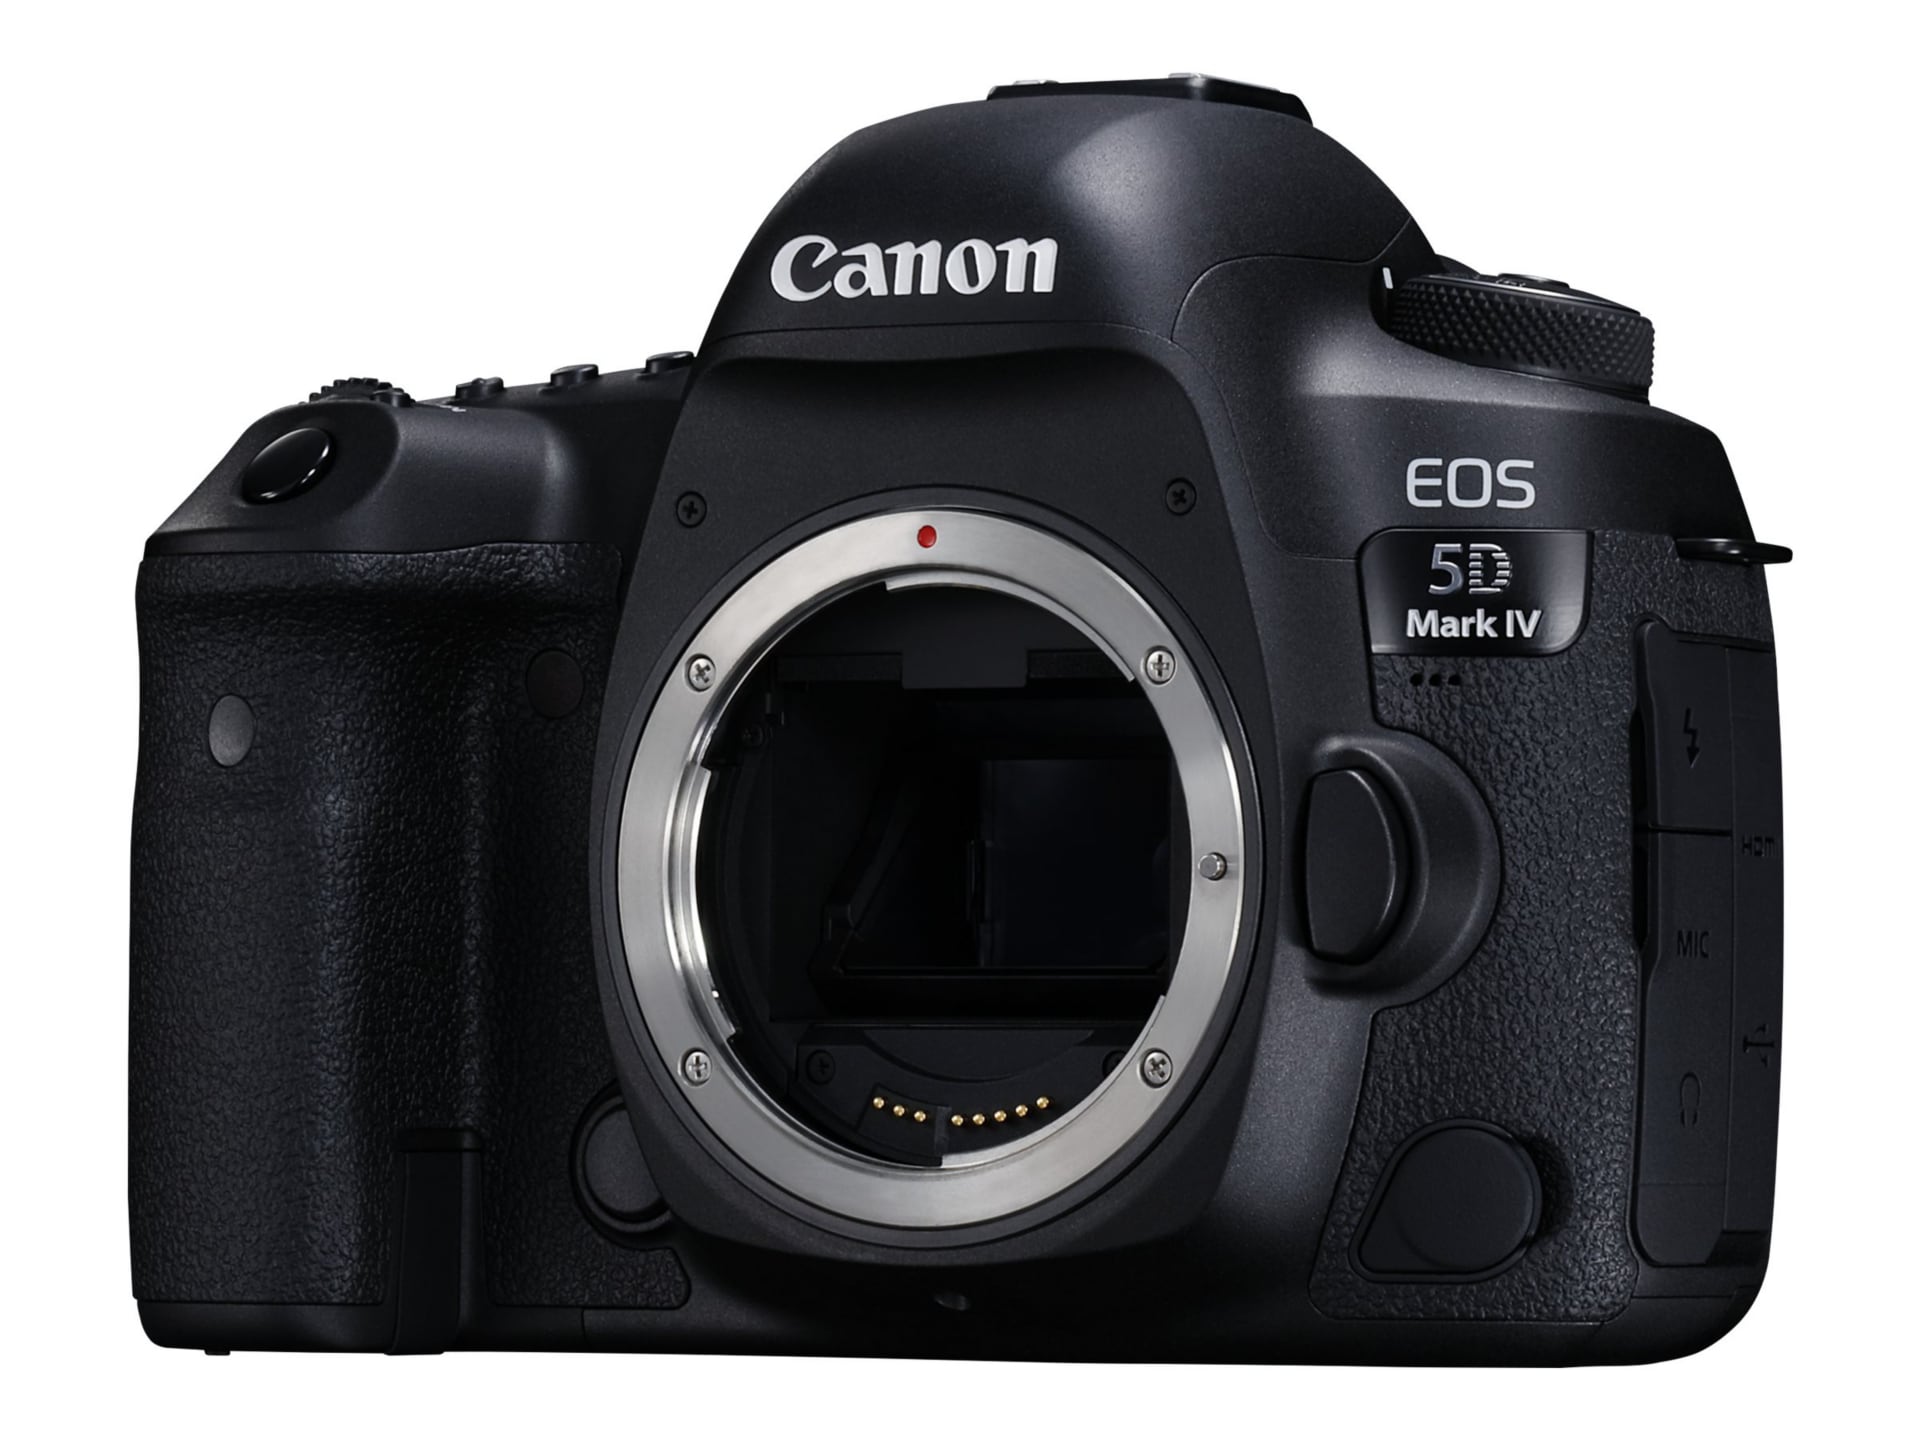 Desgastado Preguntar Disparo Canon EOS 5D Mark IV - digital camera EF 24-105mm F/4 L IS II USM lens -  1483C010 - Cameras - CDW.com